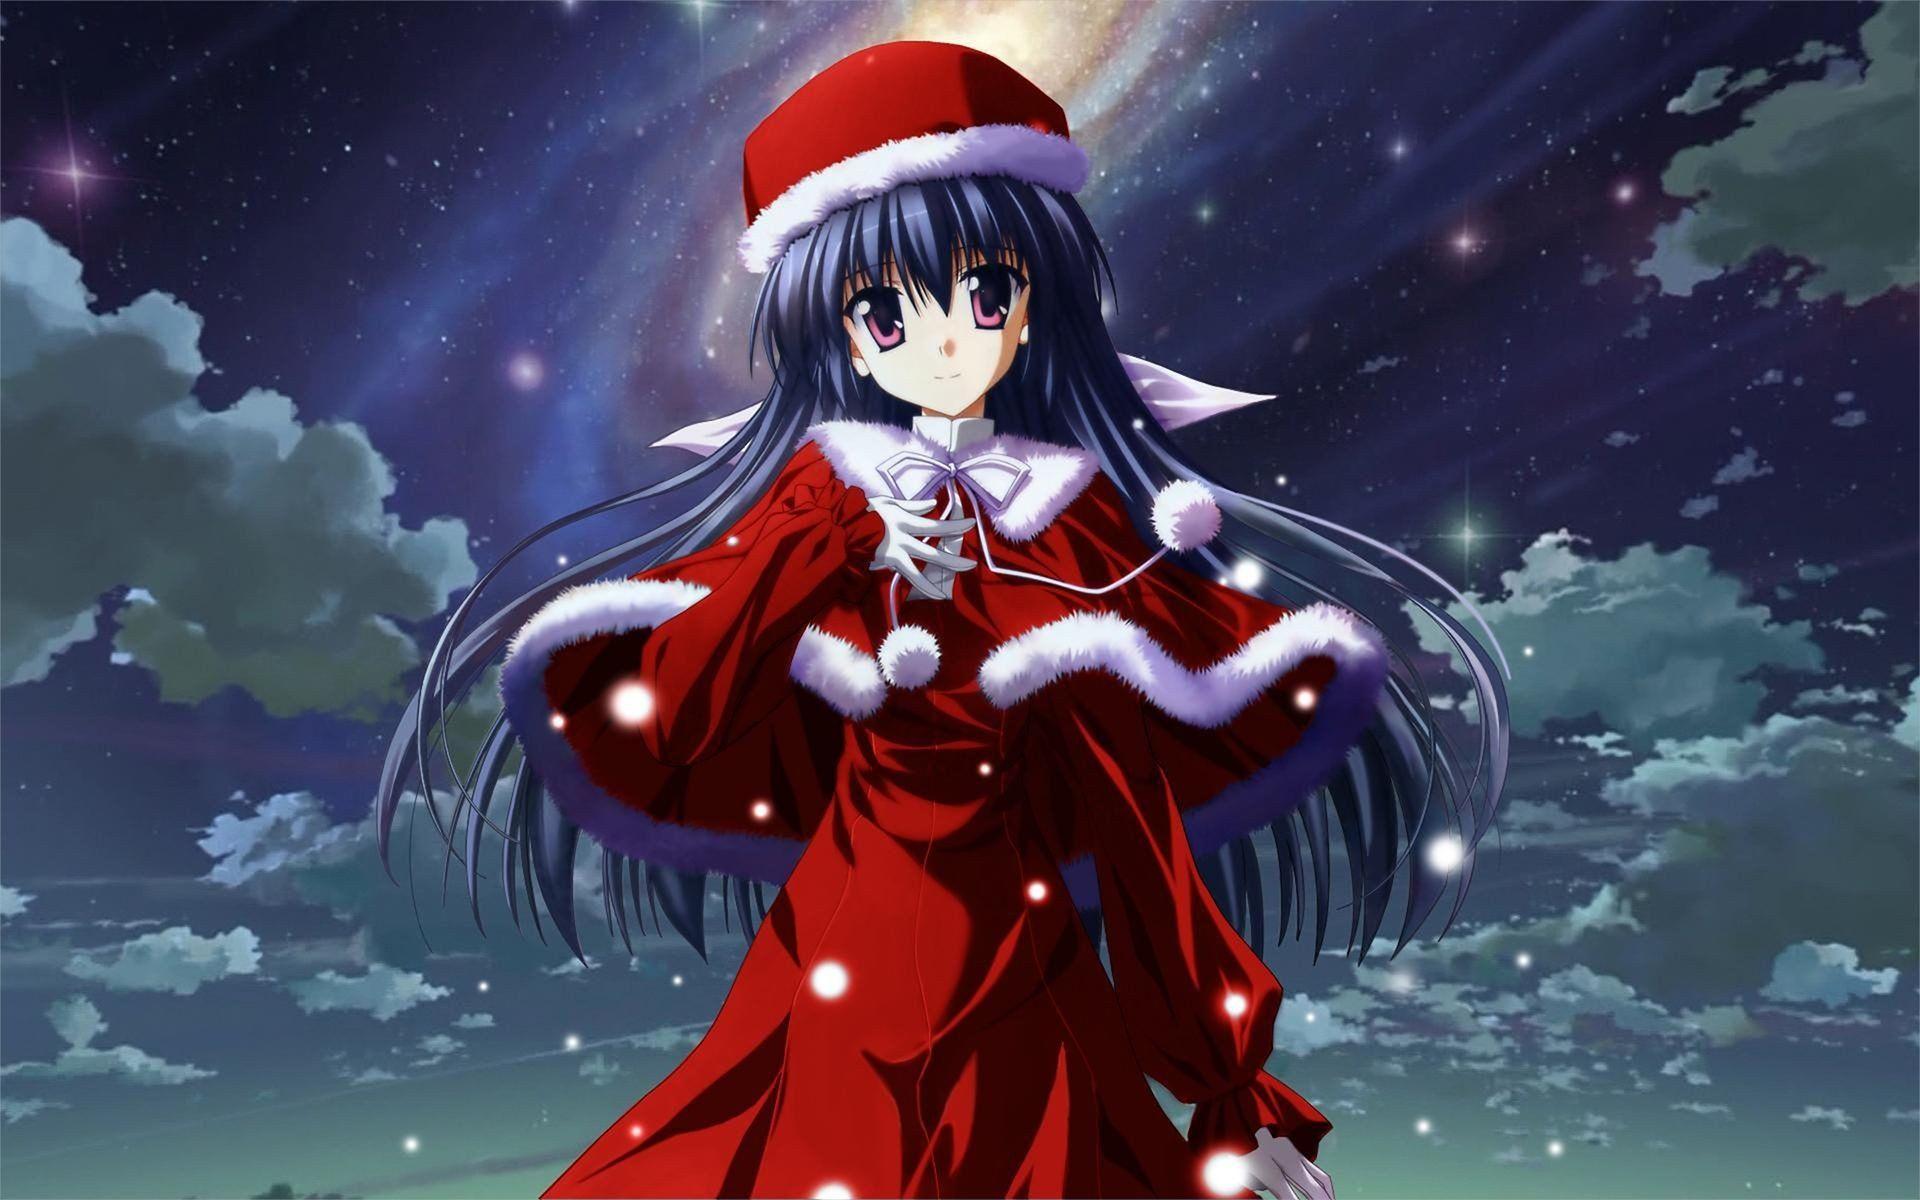 Anime Christmas Wallpaper HD Free download